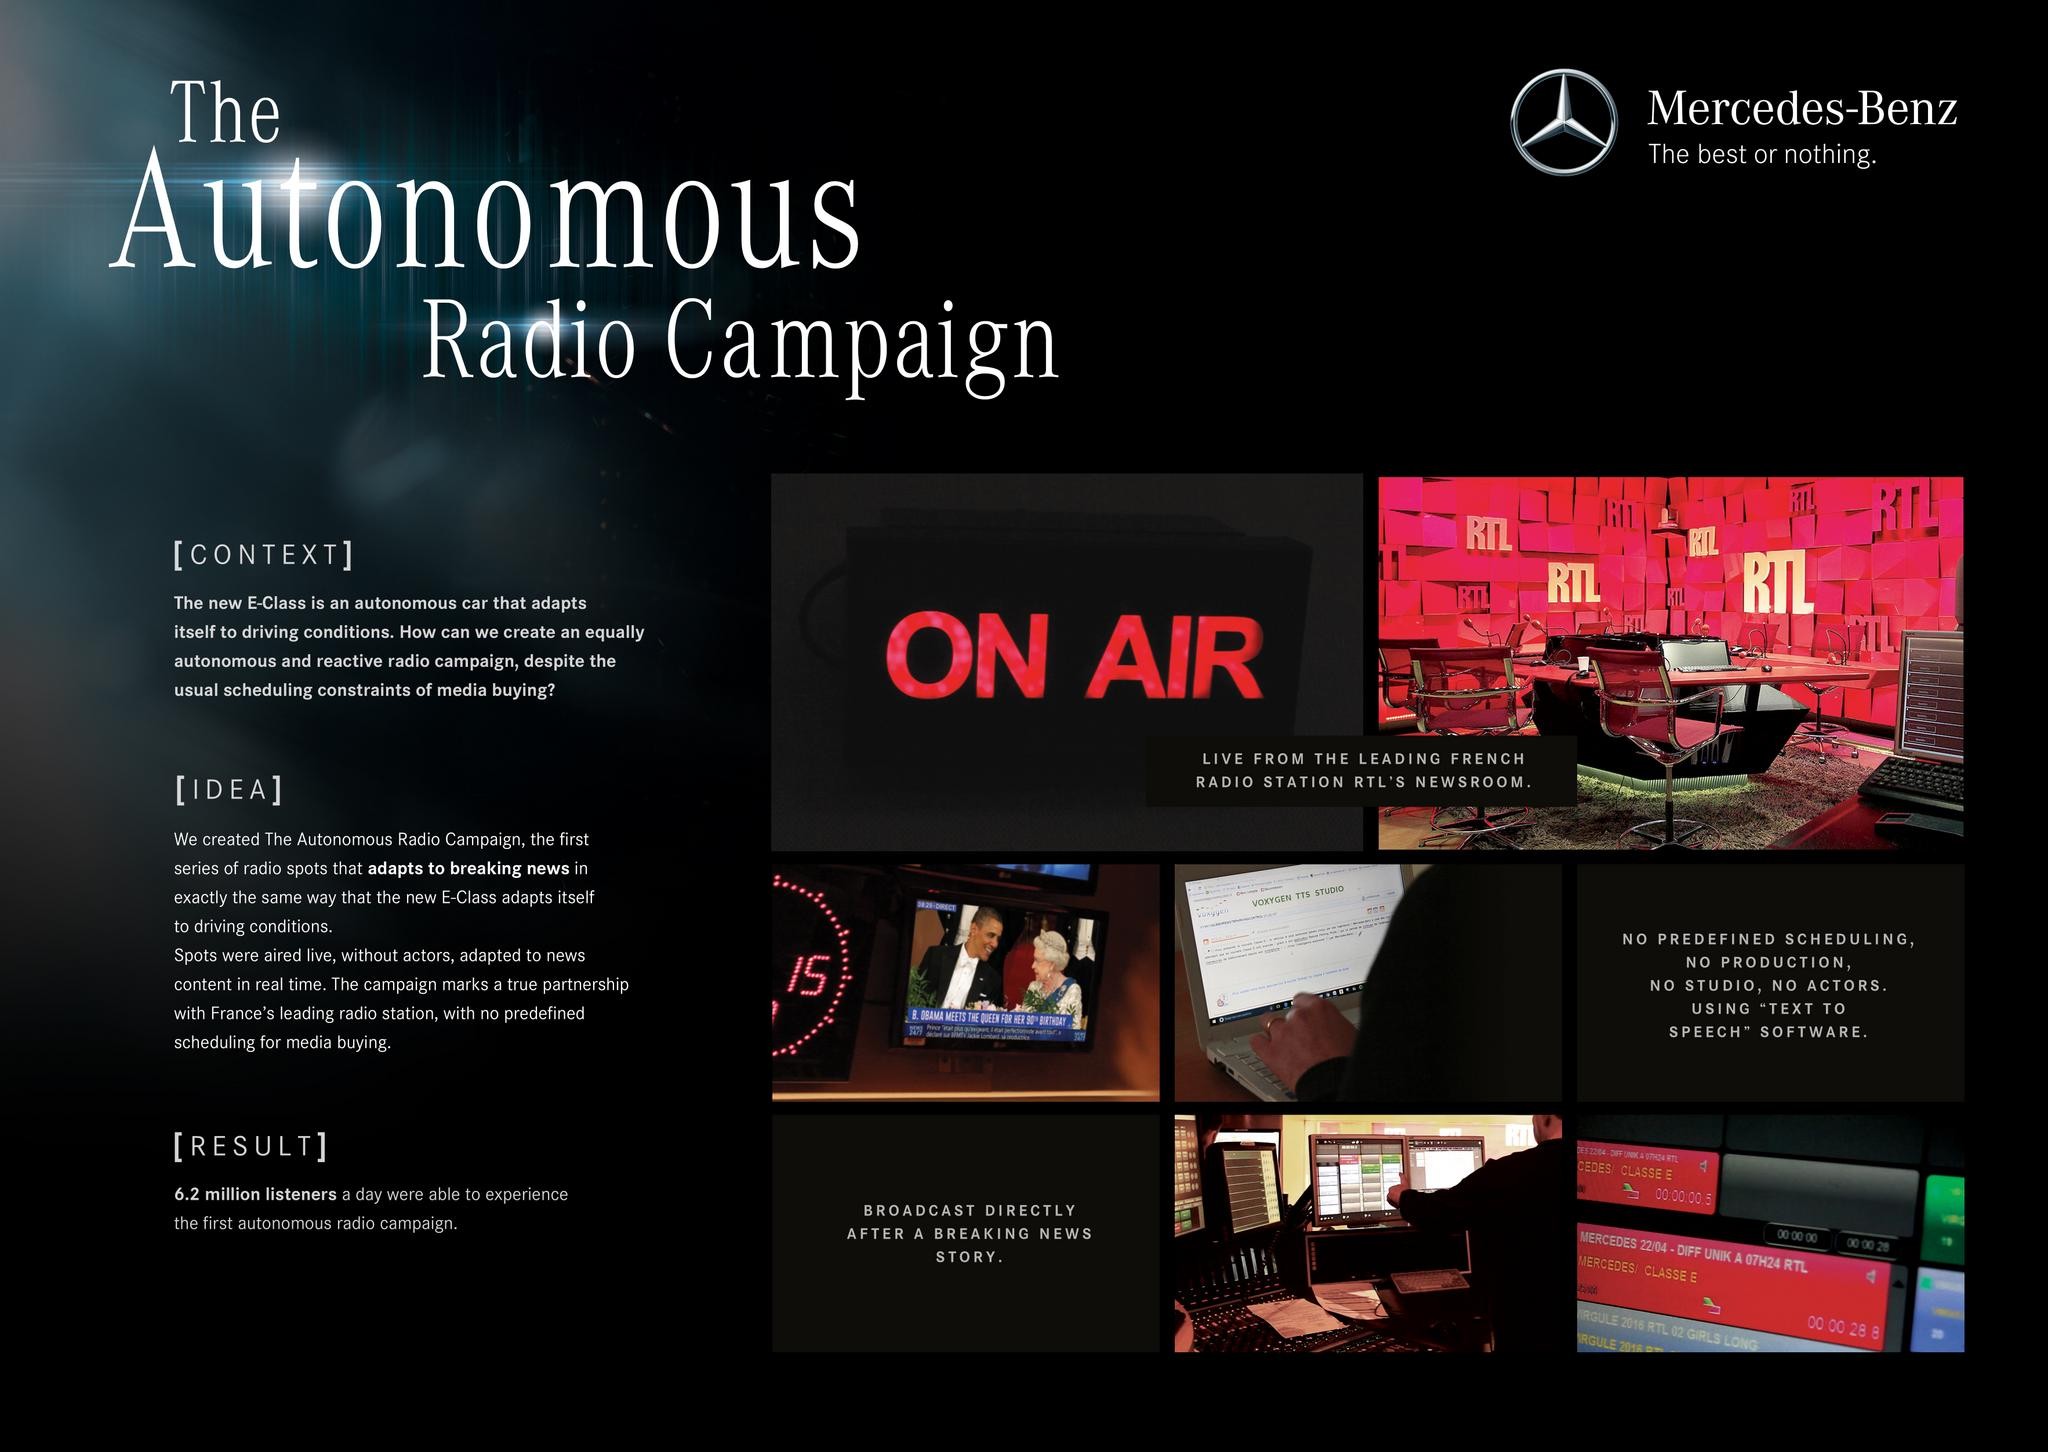 The autonomous radio campaign